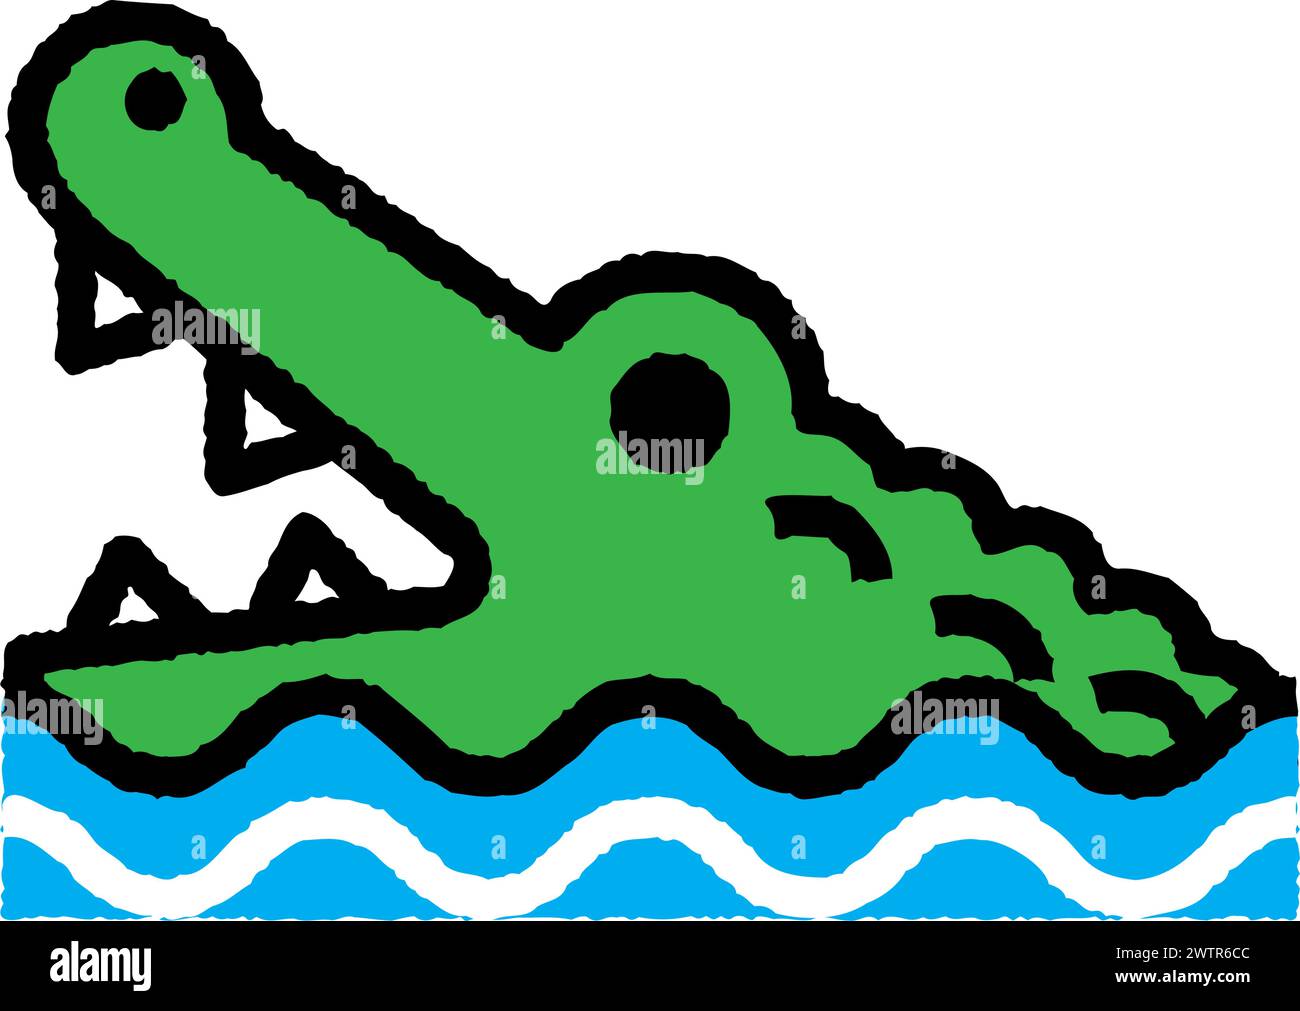 crocodile cartoon roughen filled outline icon for decoration, website, web, mobile app, printing, banner, logo, poster design, etc. Stock Vector